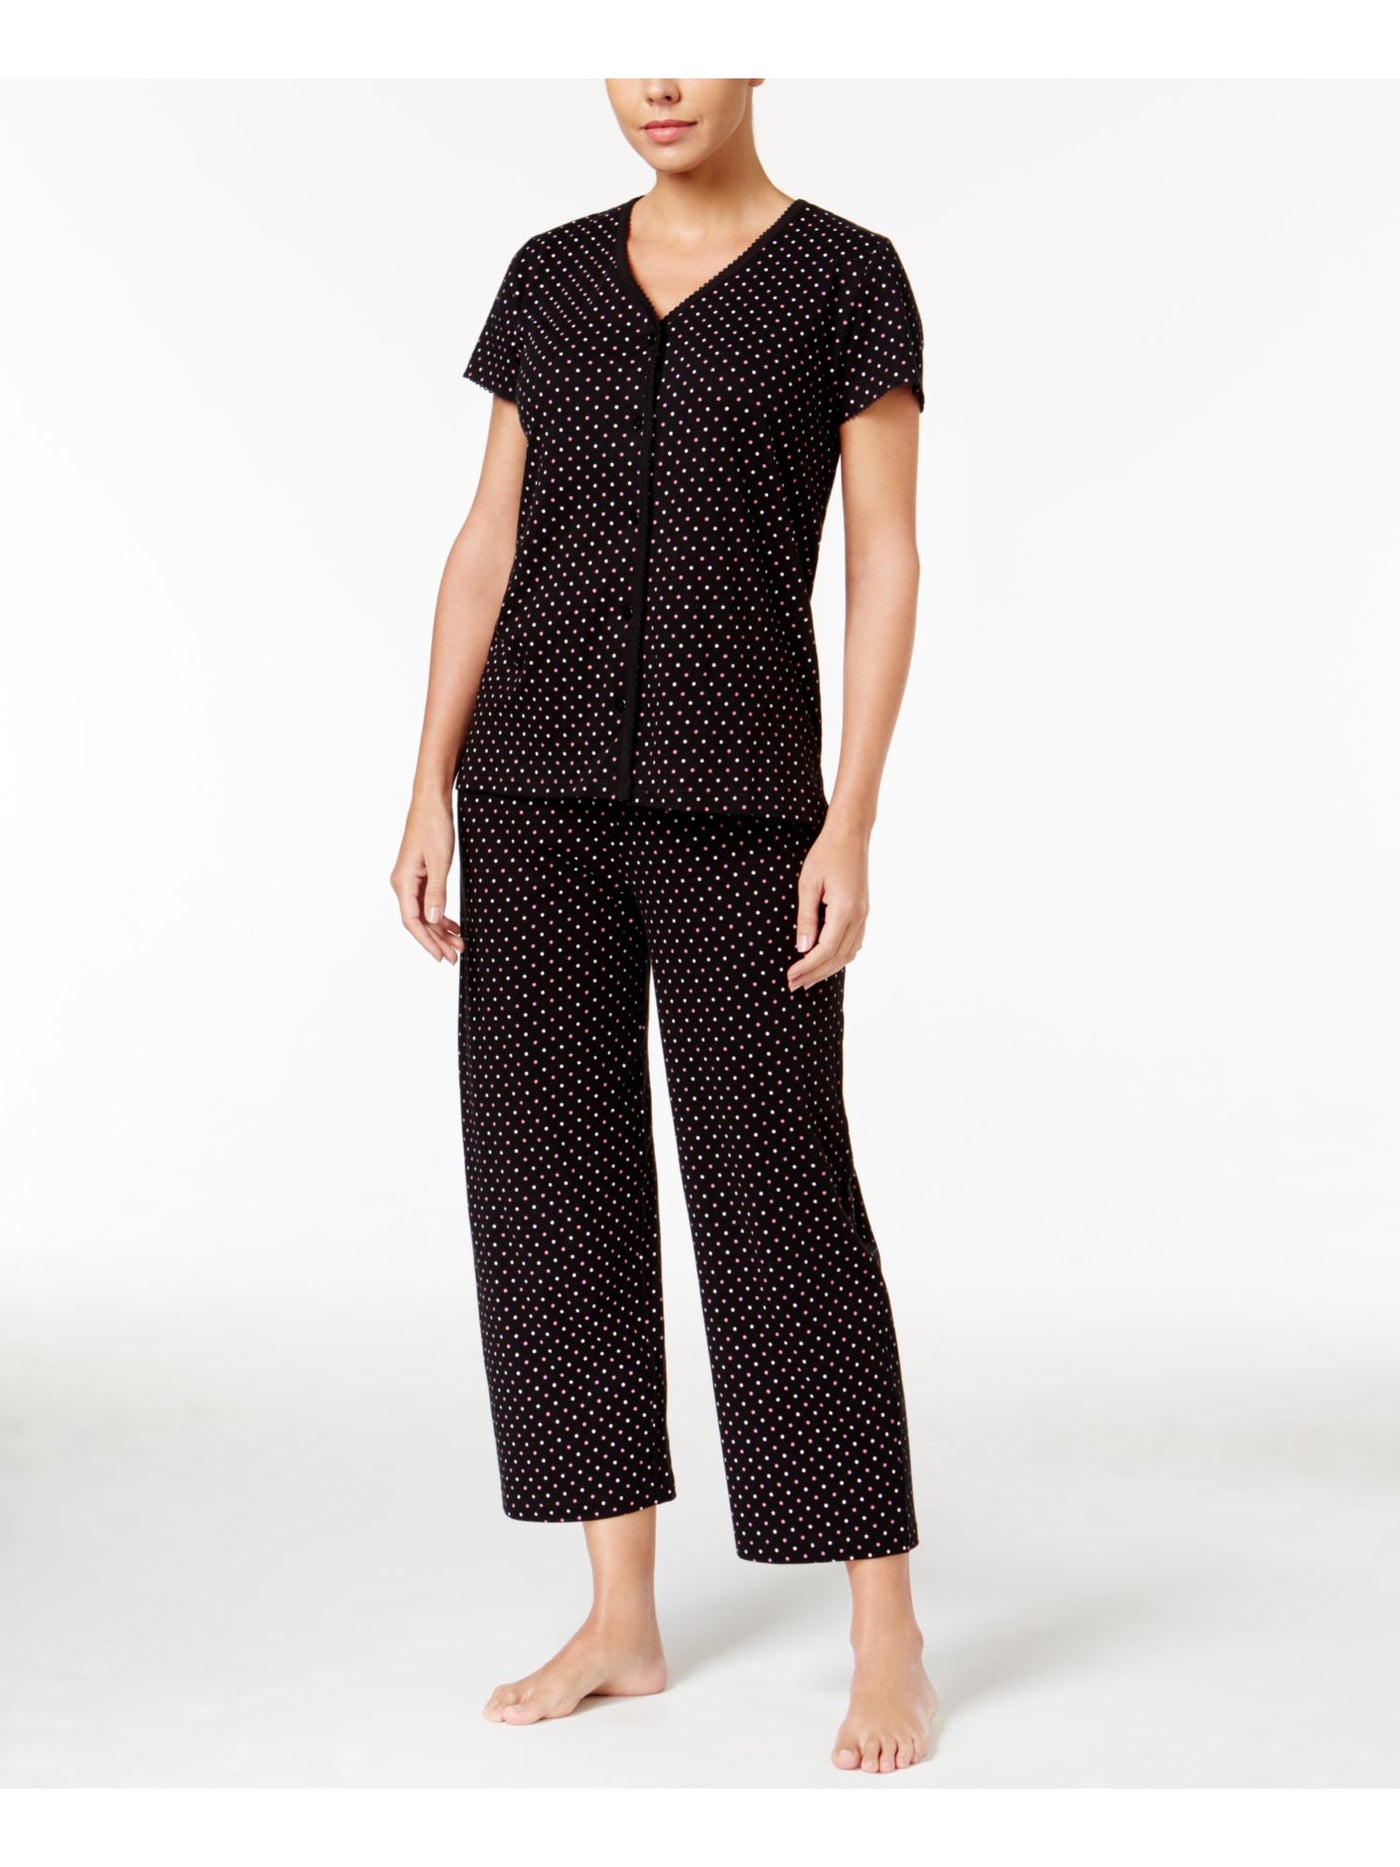 CHARTER CLUB Womens Black Polka Dot Elastic Band Button Up Top Cropped Pants Pajamas M